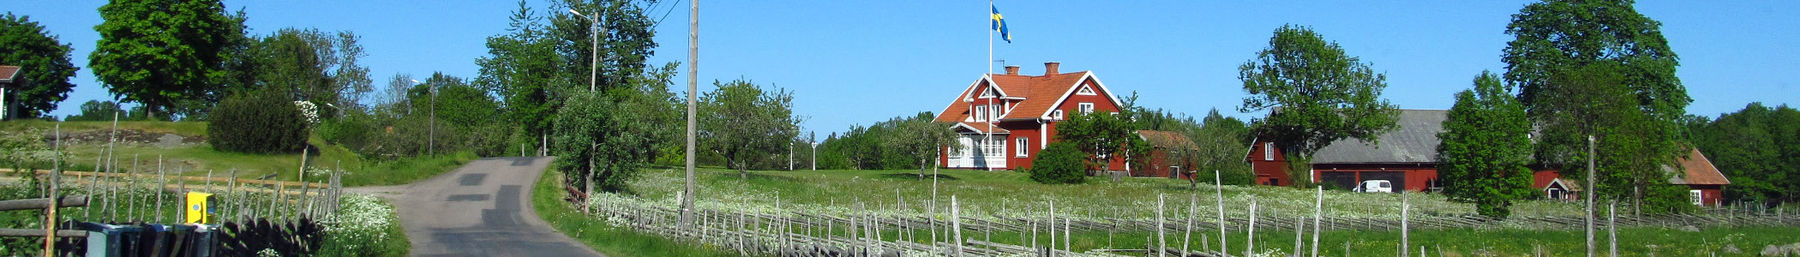 Brabygden Sweden banner.jpg